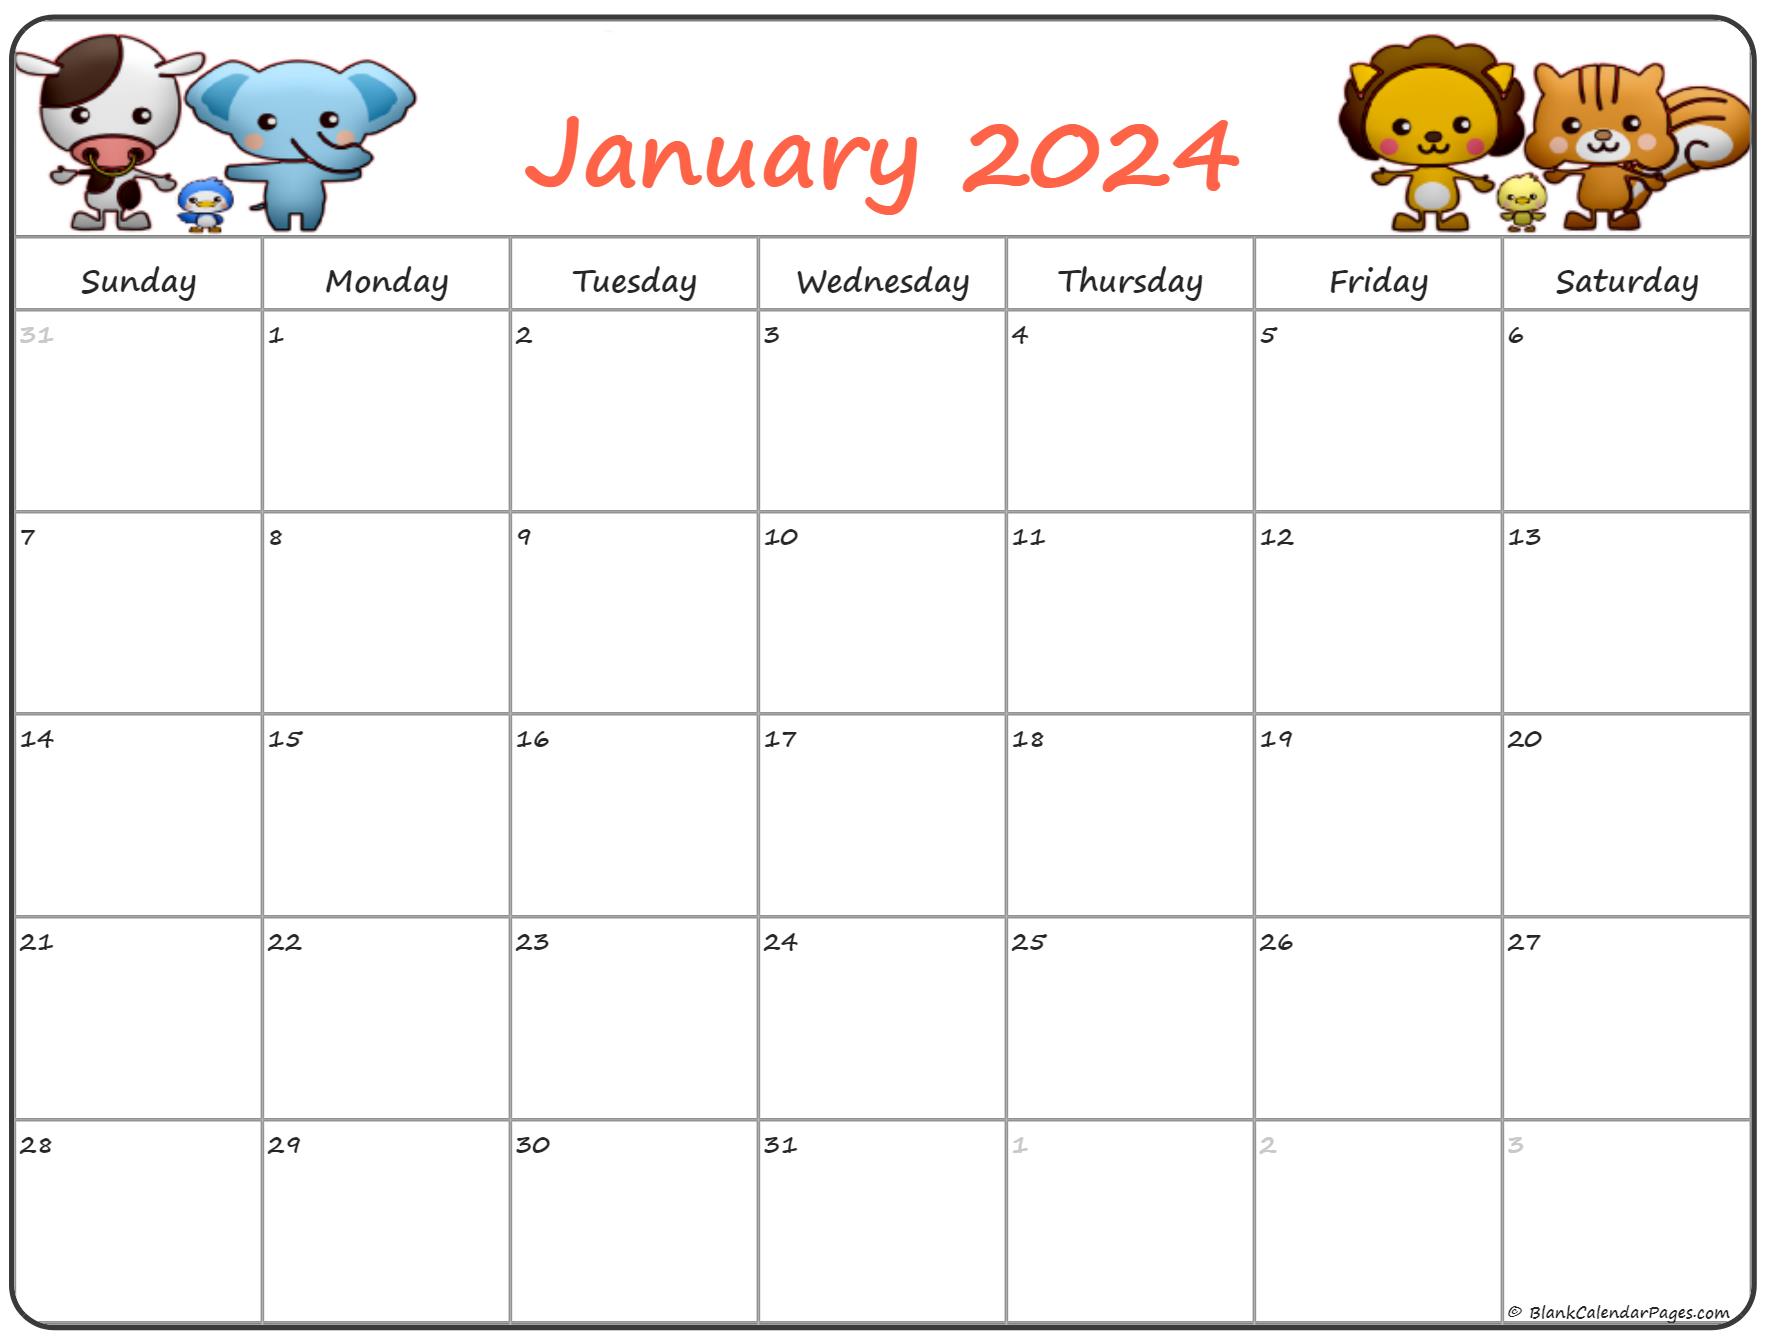 January 2020 Pregnancy Calendar